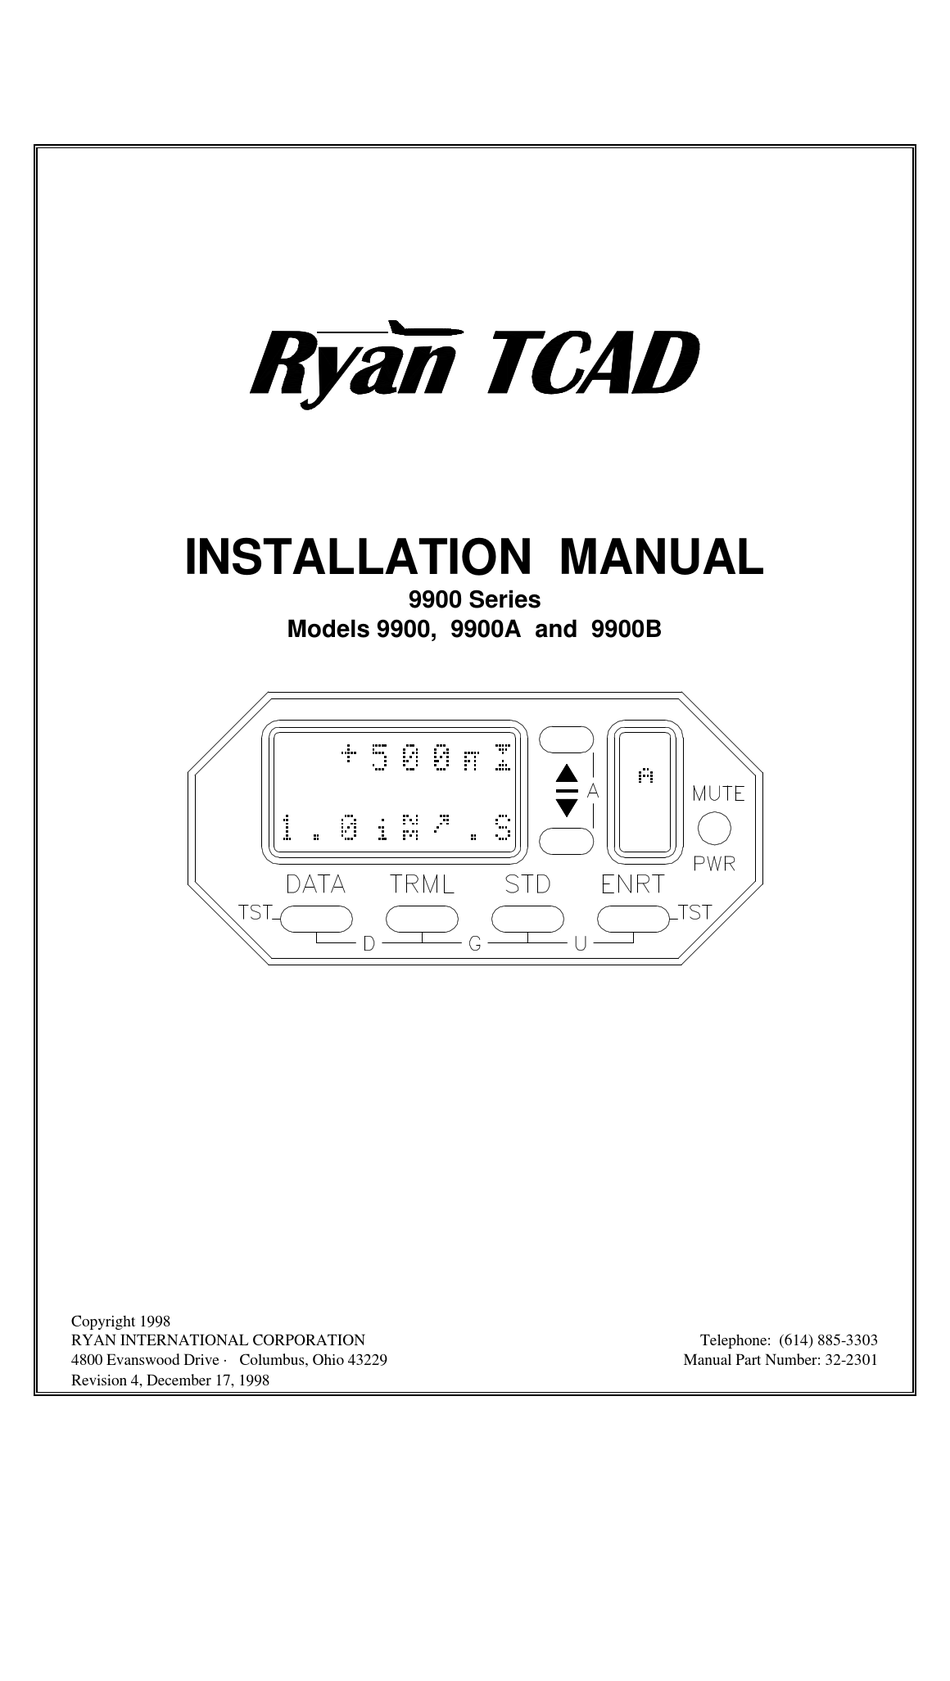 Ryan Tcad 9900 Installation Manual Pdf